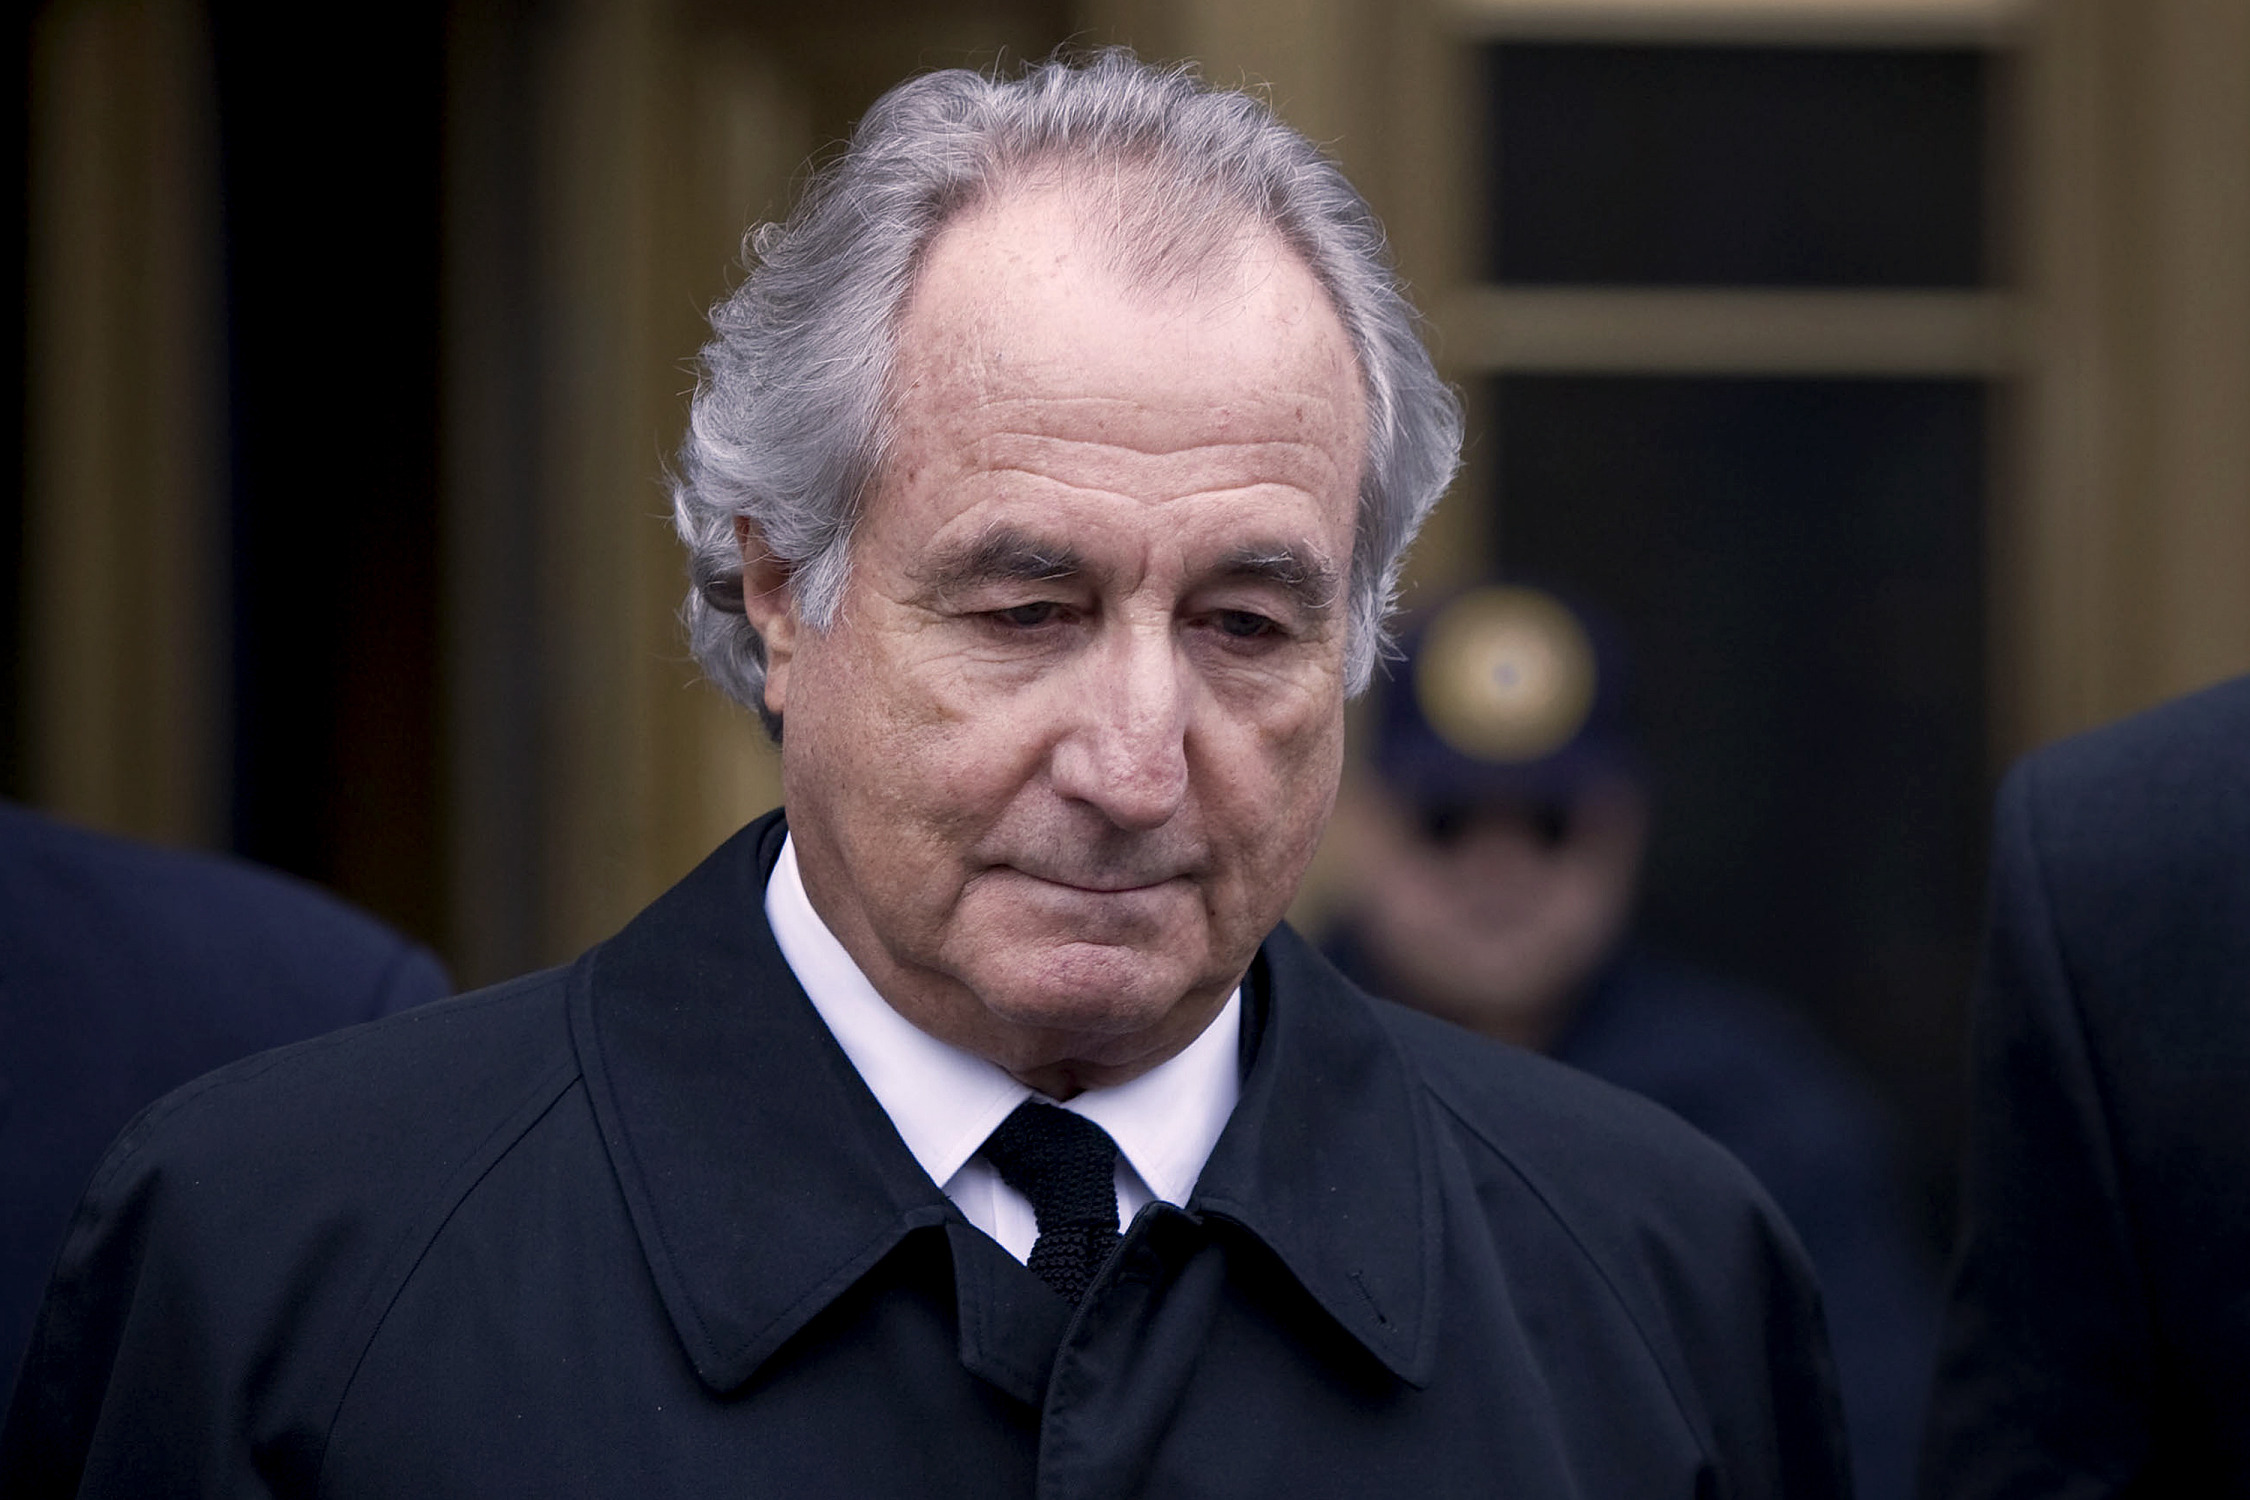 Bernard Madoff&nbsp;leaves federal court in New York on&nbsp;March 10, 2009.&nbsp;